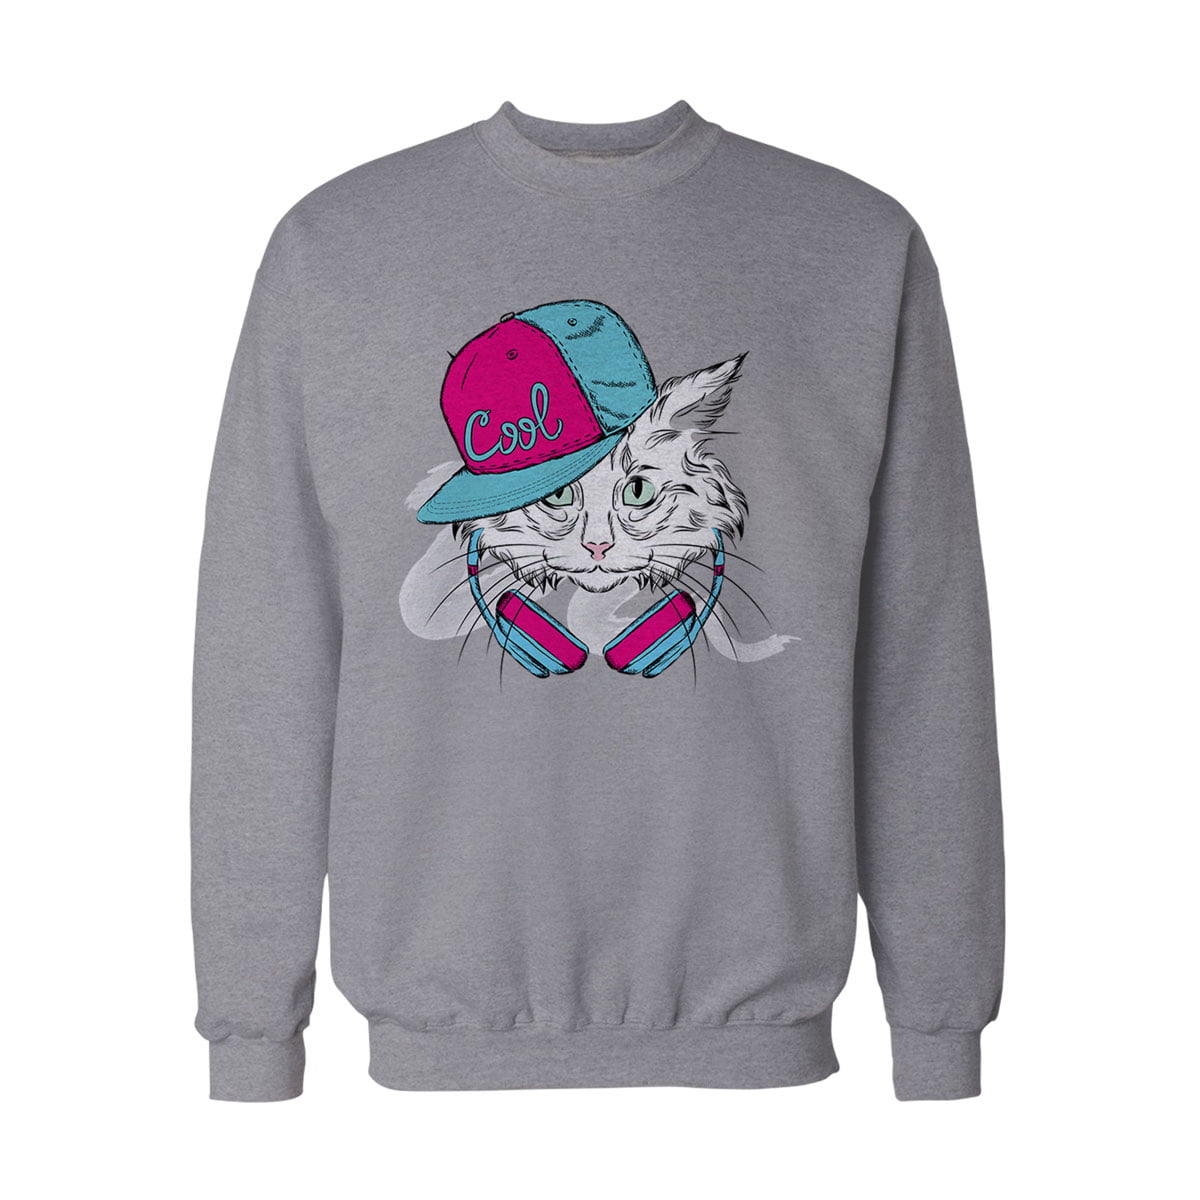 Dj cool kedi sweayshirt g - cool dj kedi tasarımlı sweatshirt - figurex